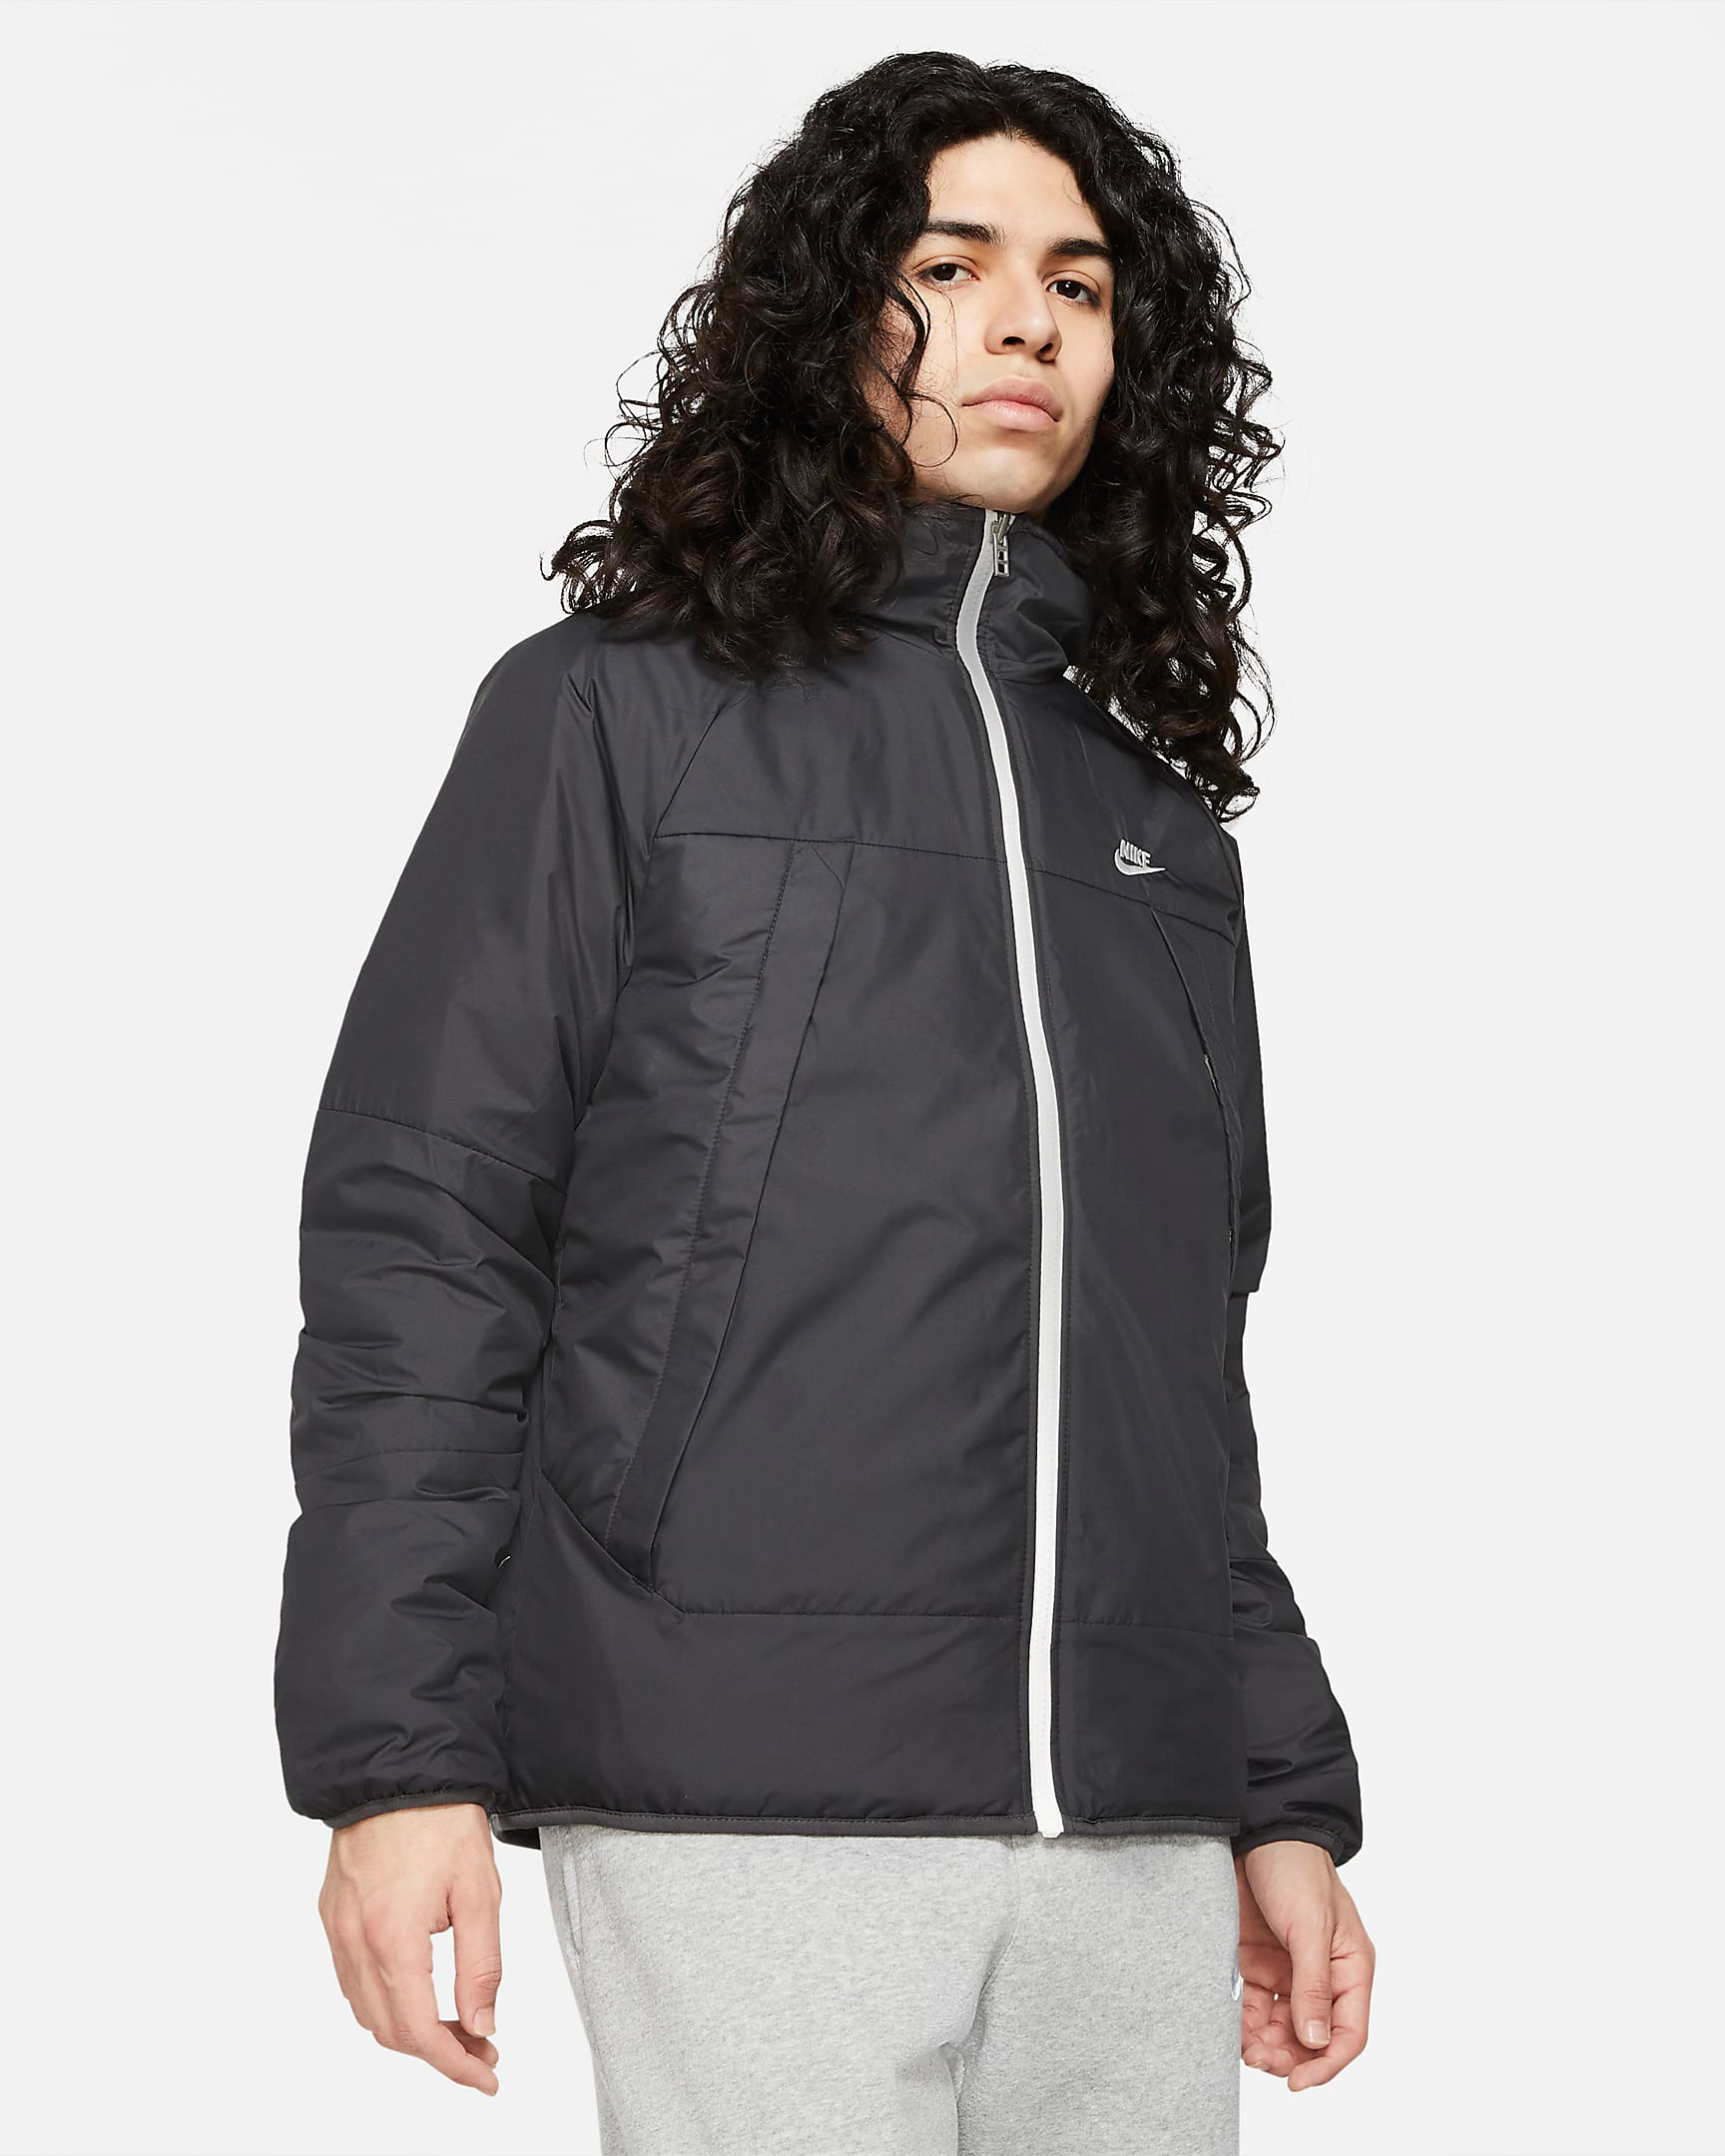 nike-sportswear-therma-fit-legacy-reversible-hooded-jacket-black-sail-3